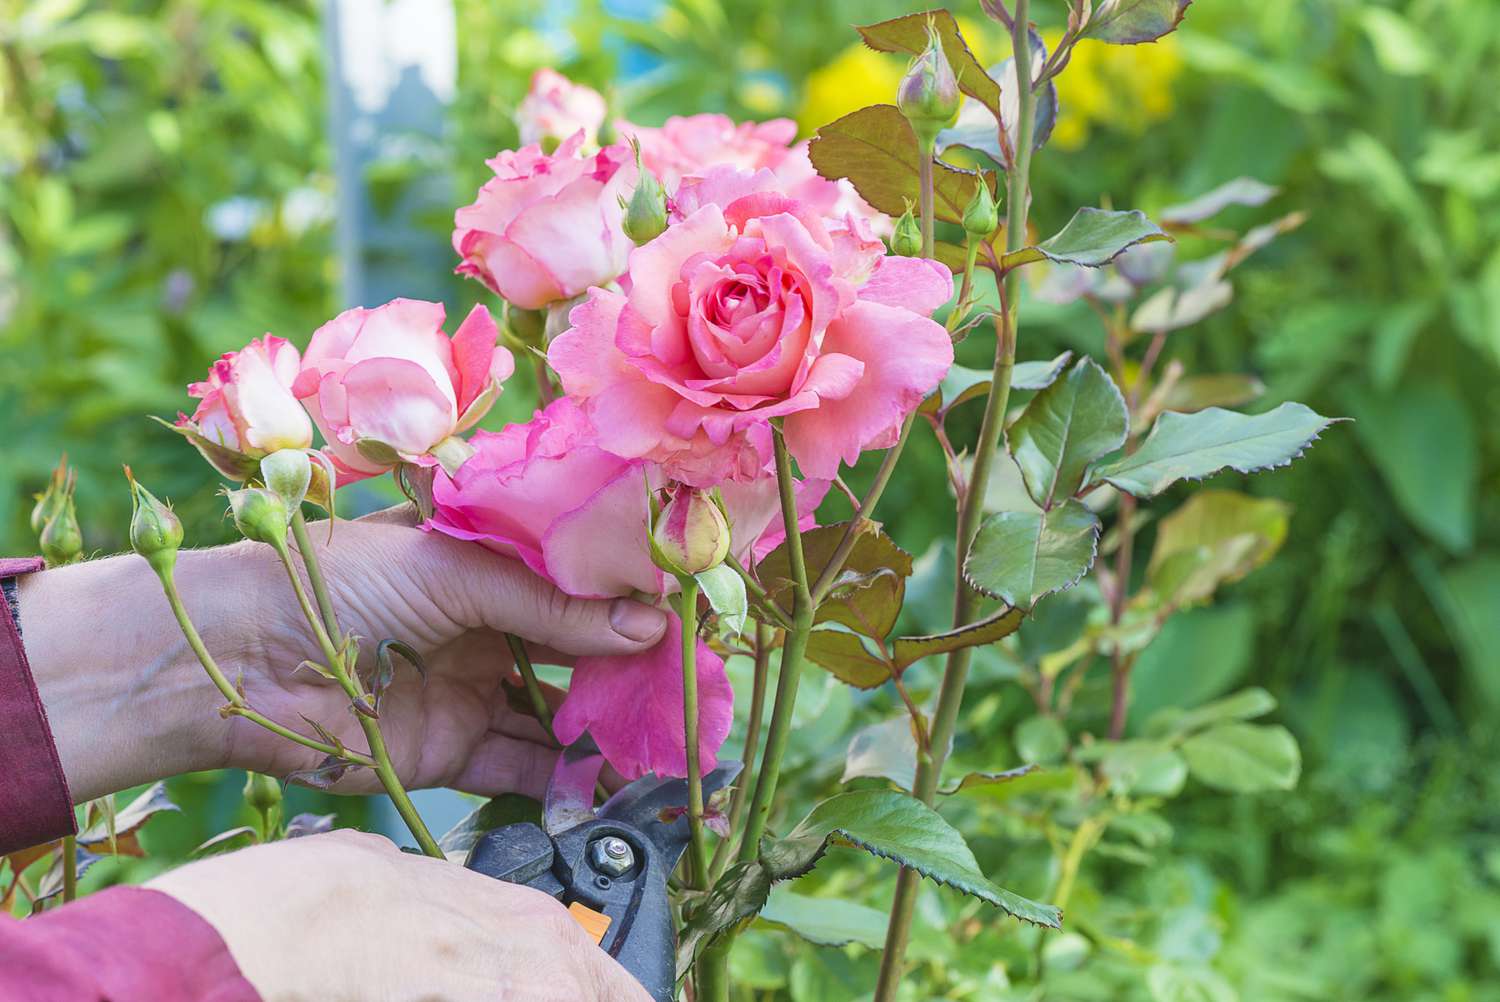 Rosa Rosenstrauch wird im Garten beschnitten